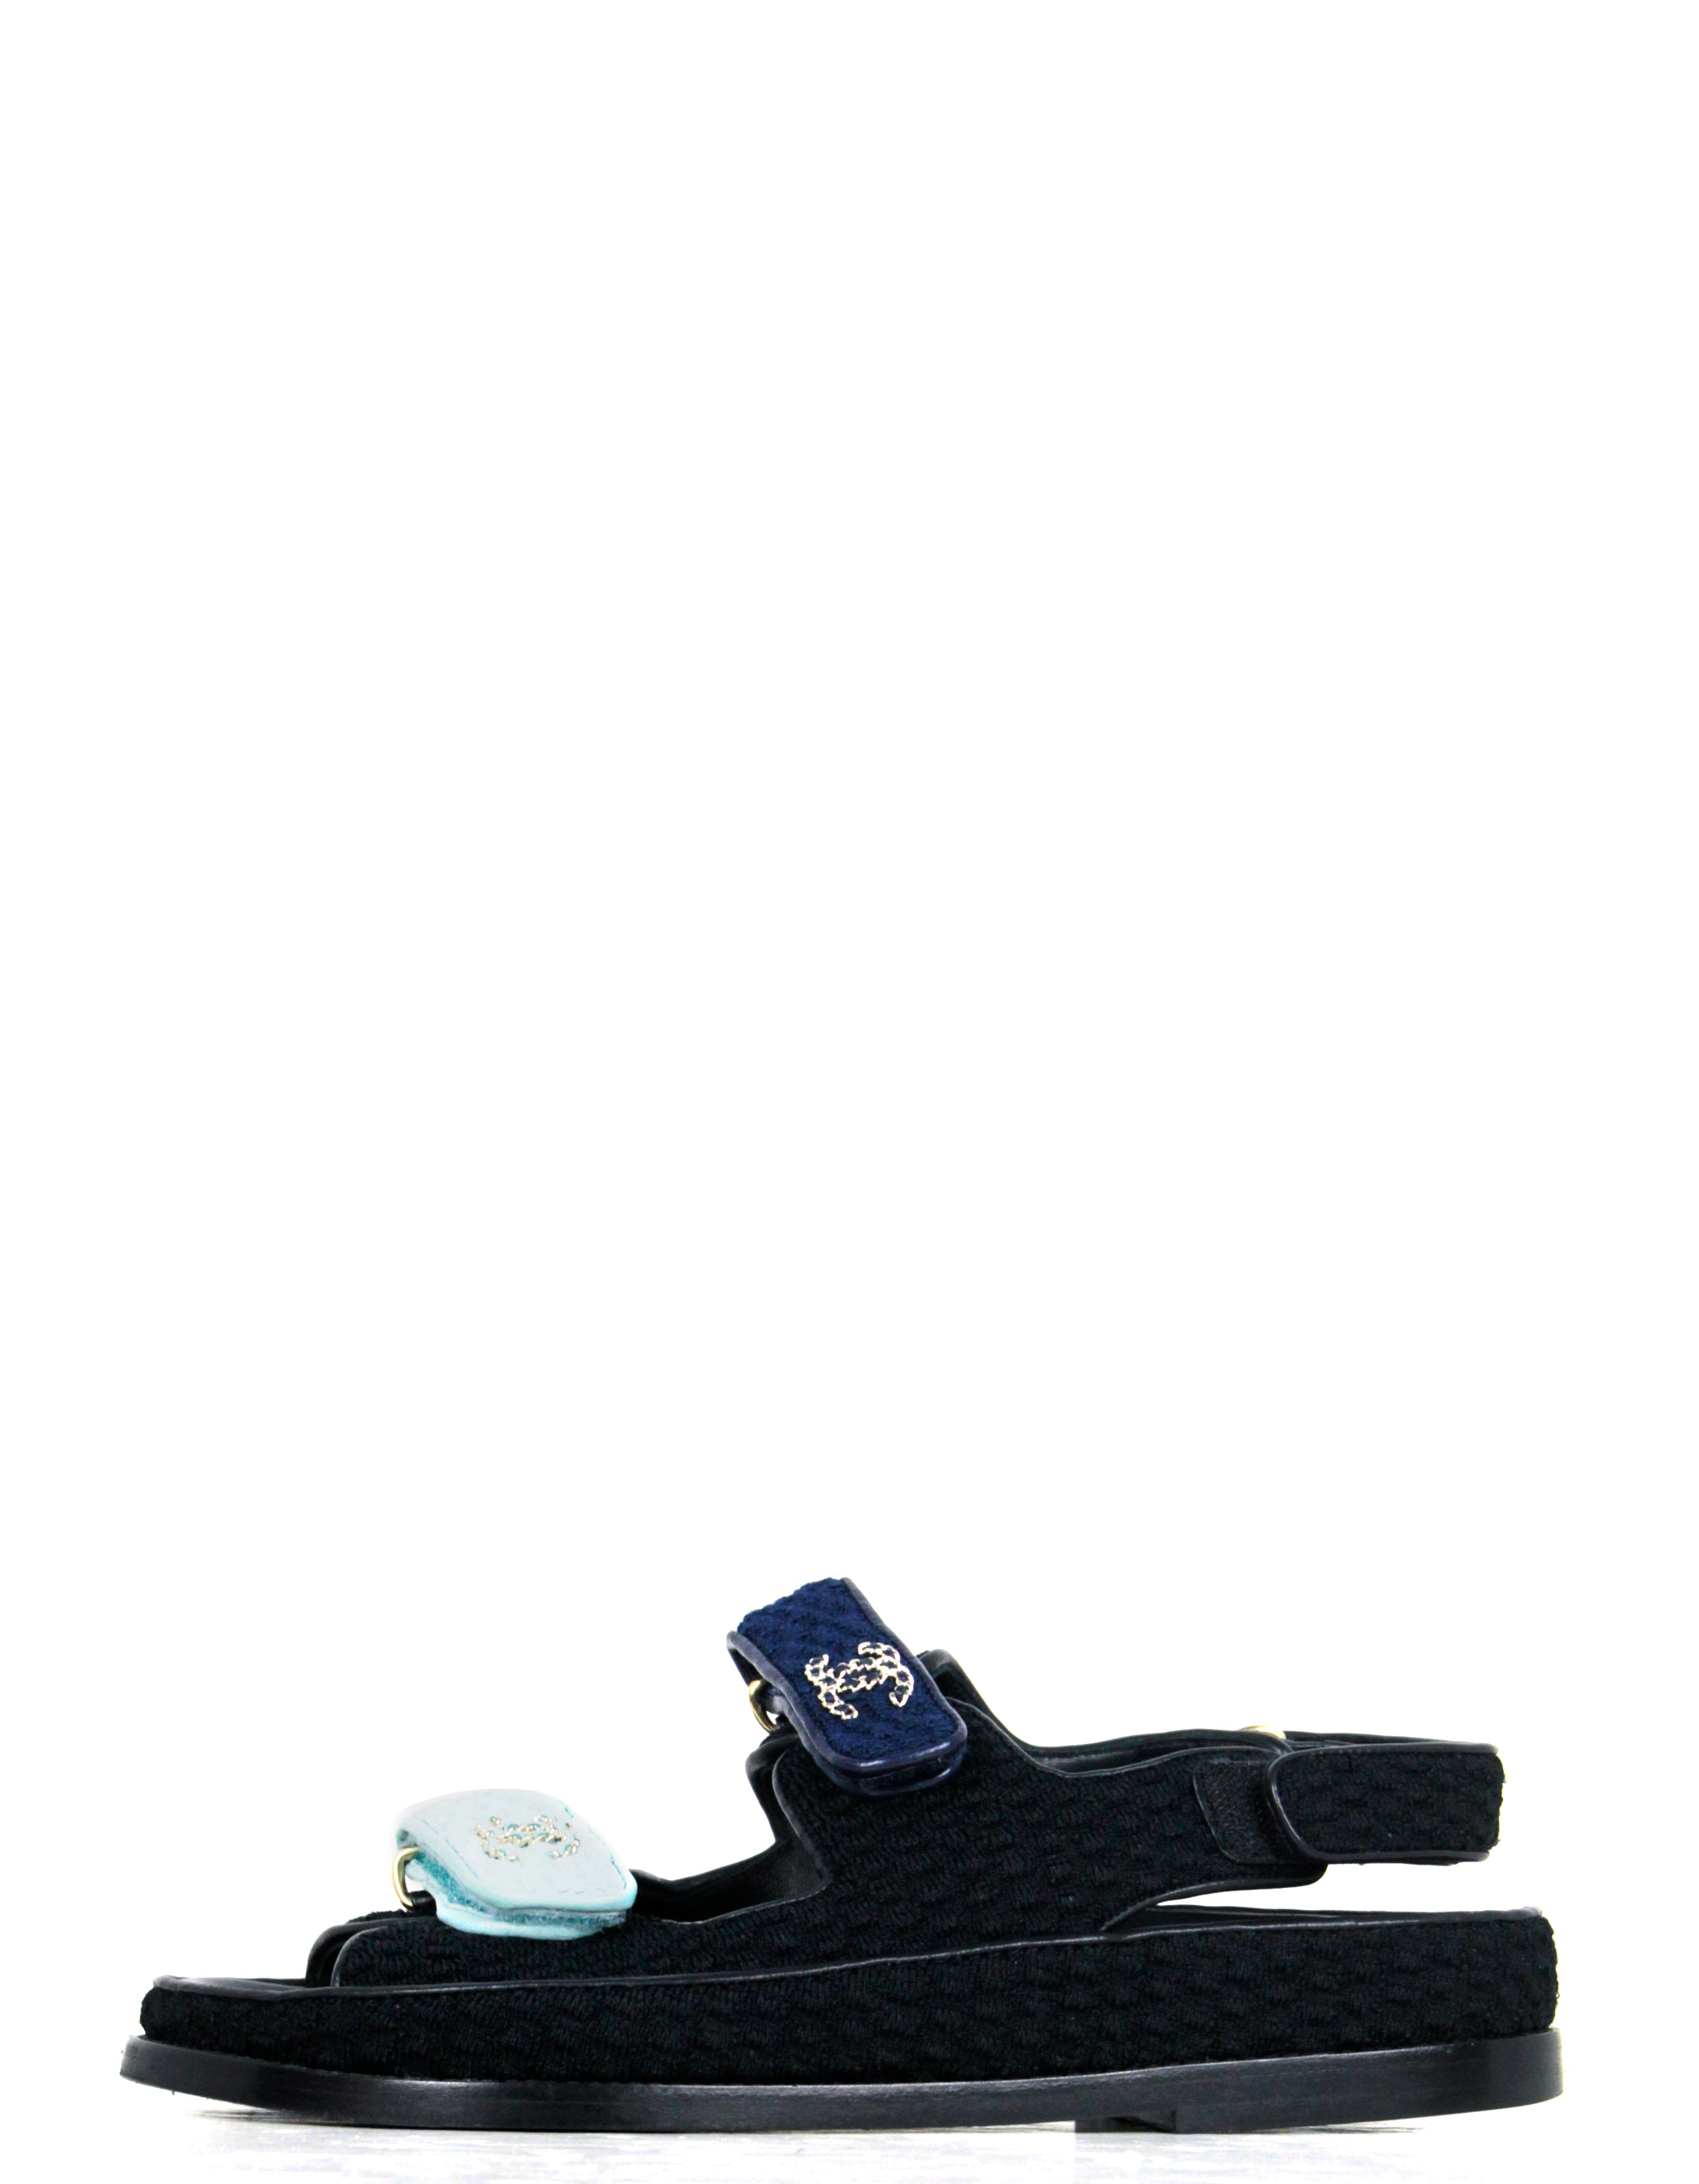 Chanel Light/Dark Blue Knit Fabric Velcro Dad Sandals sz 38 For